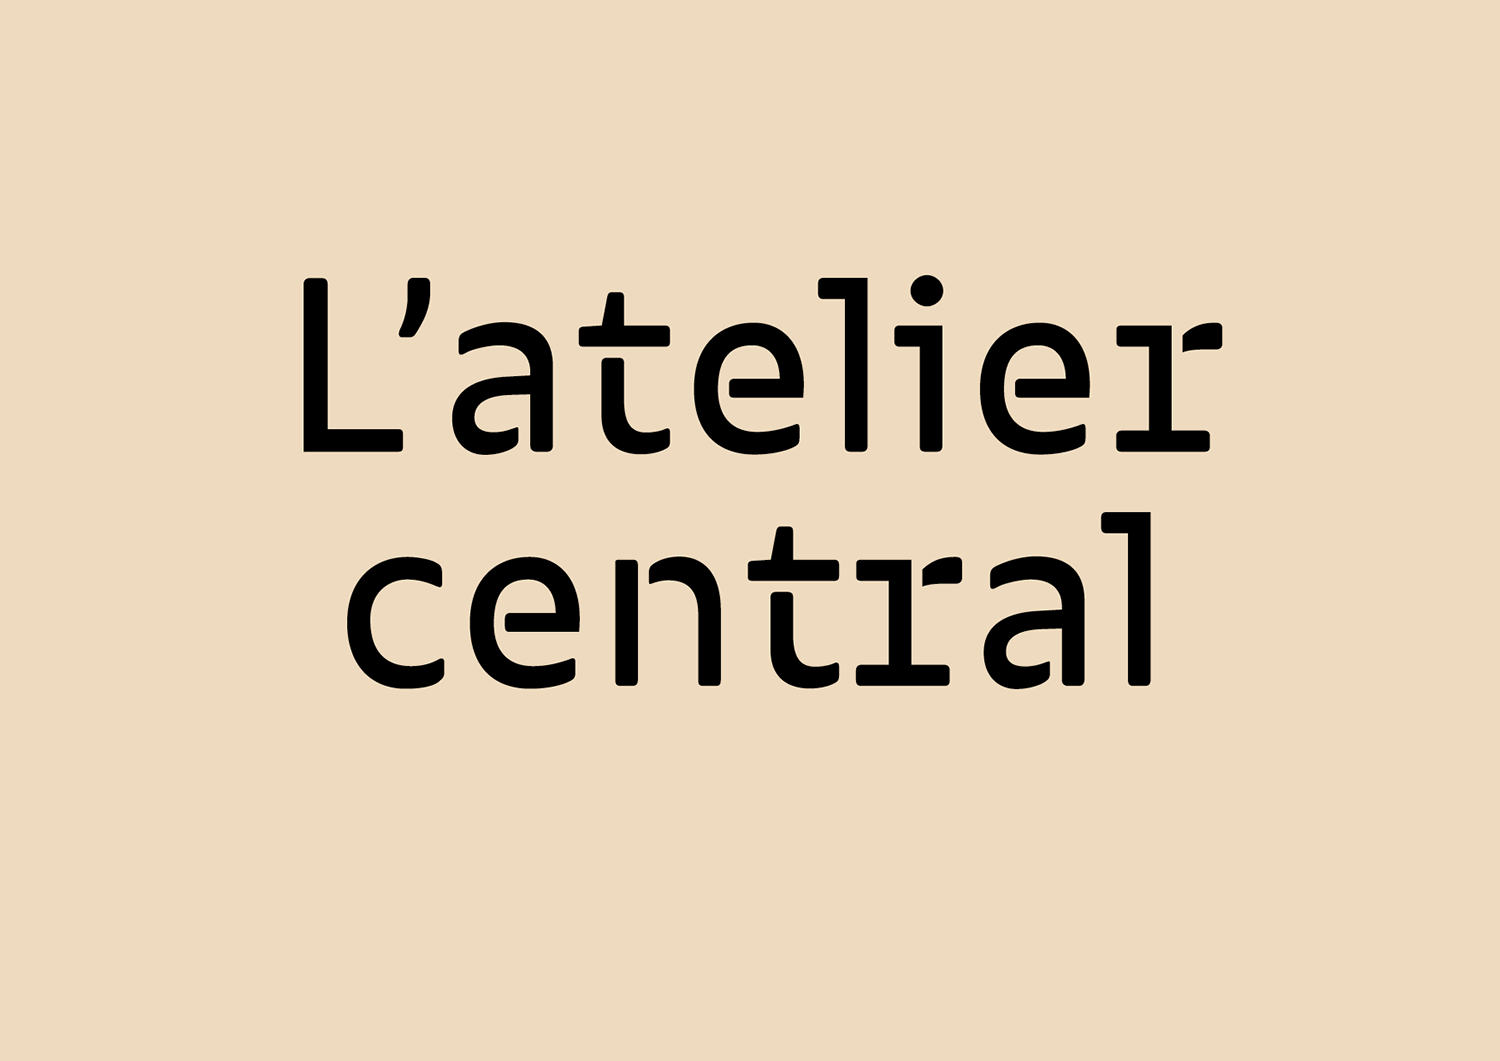 arabic letter typeface